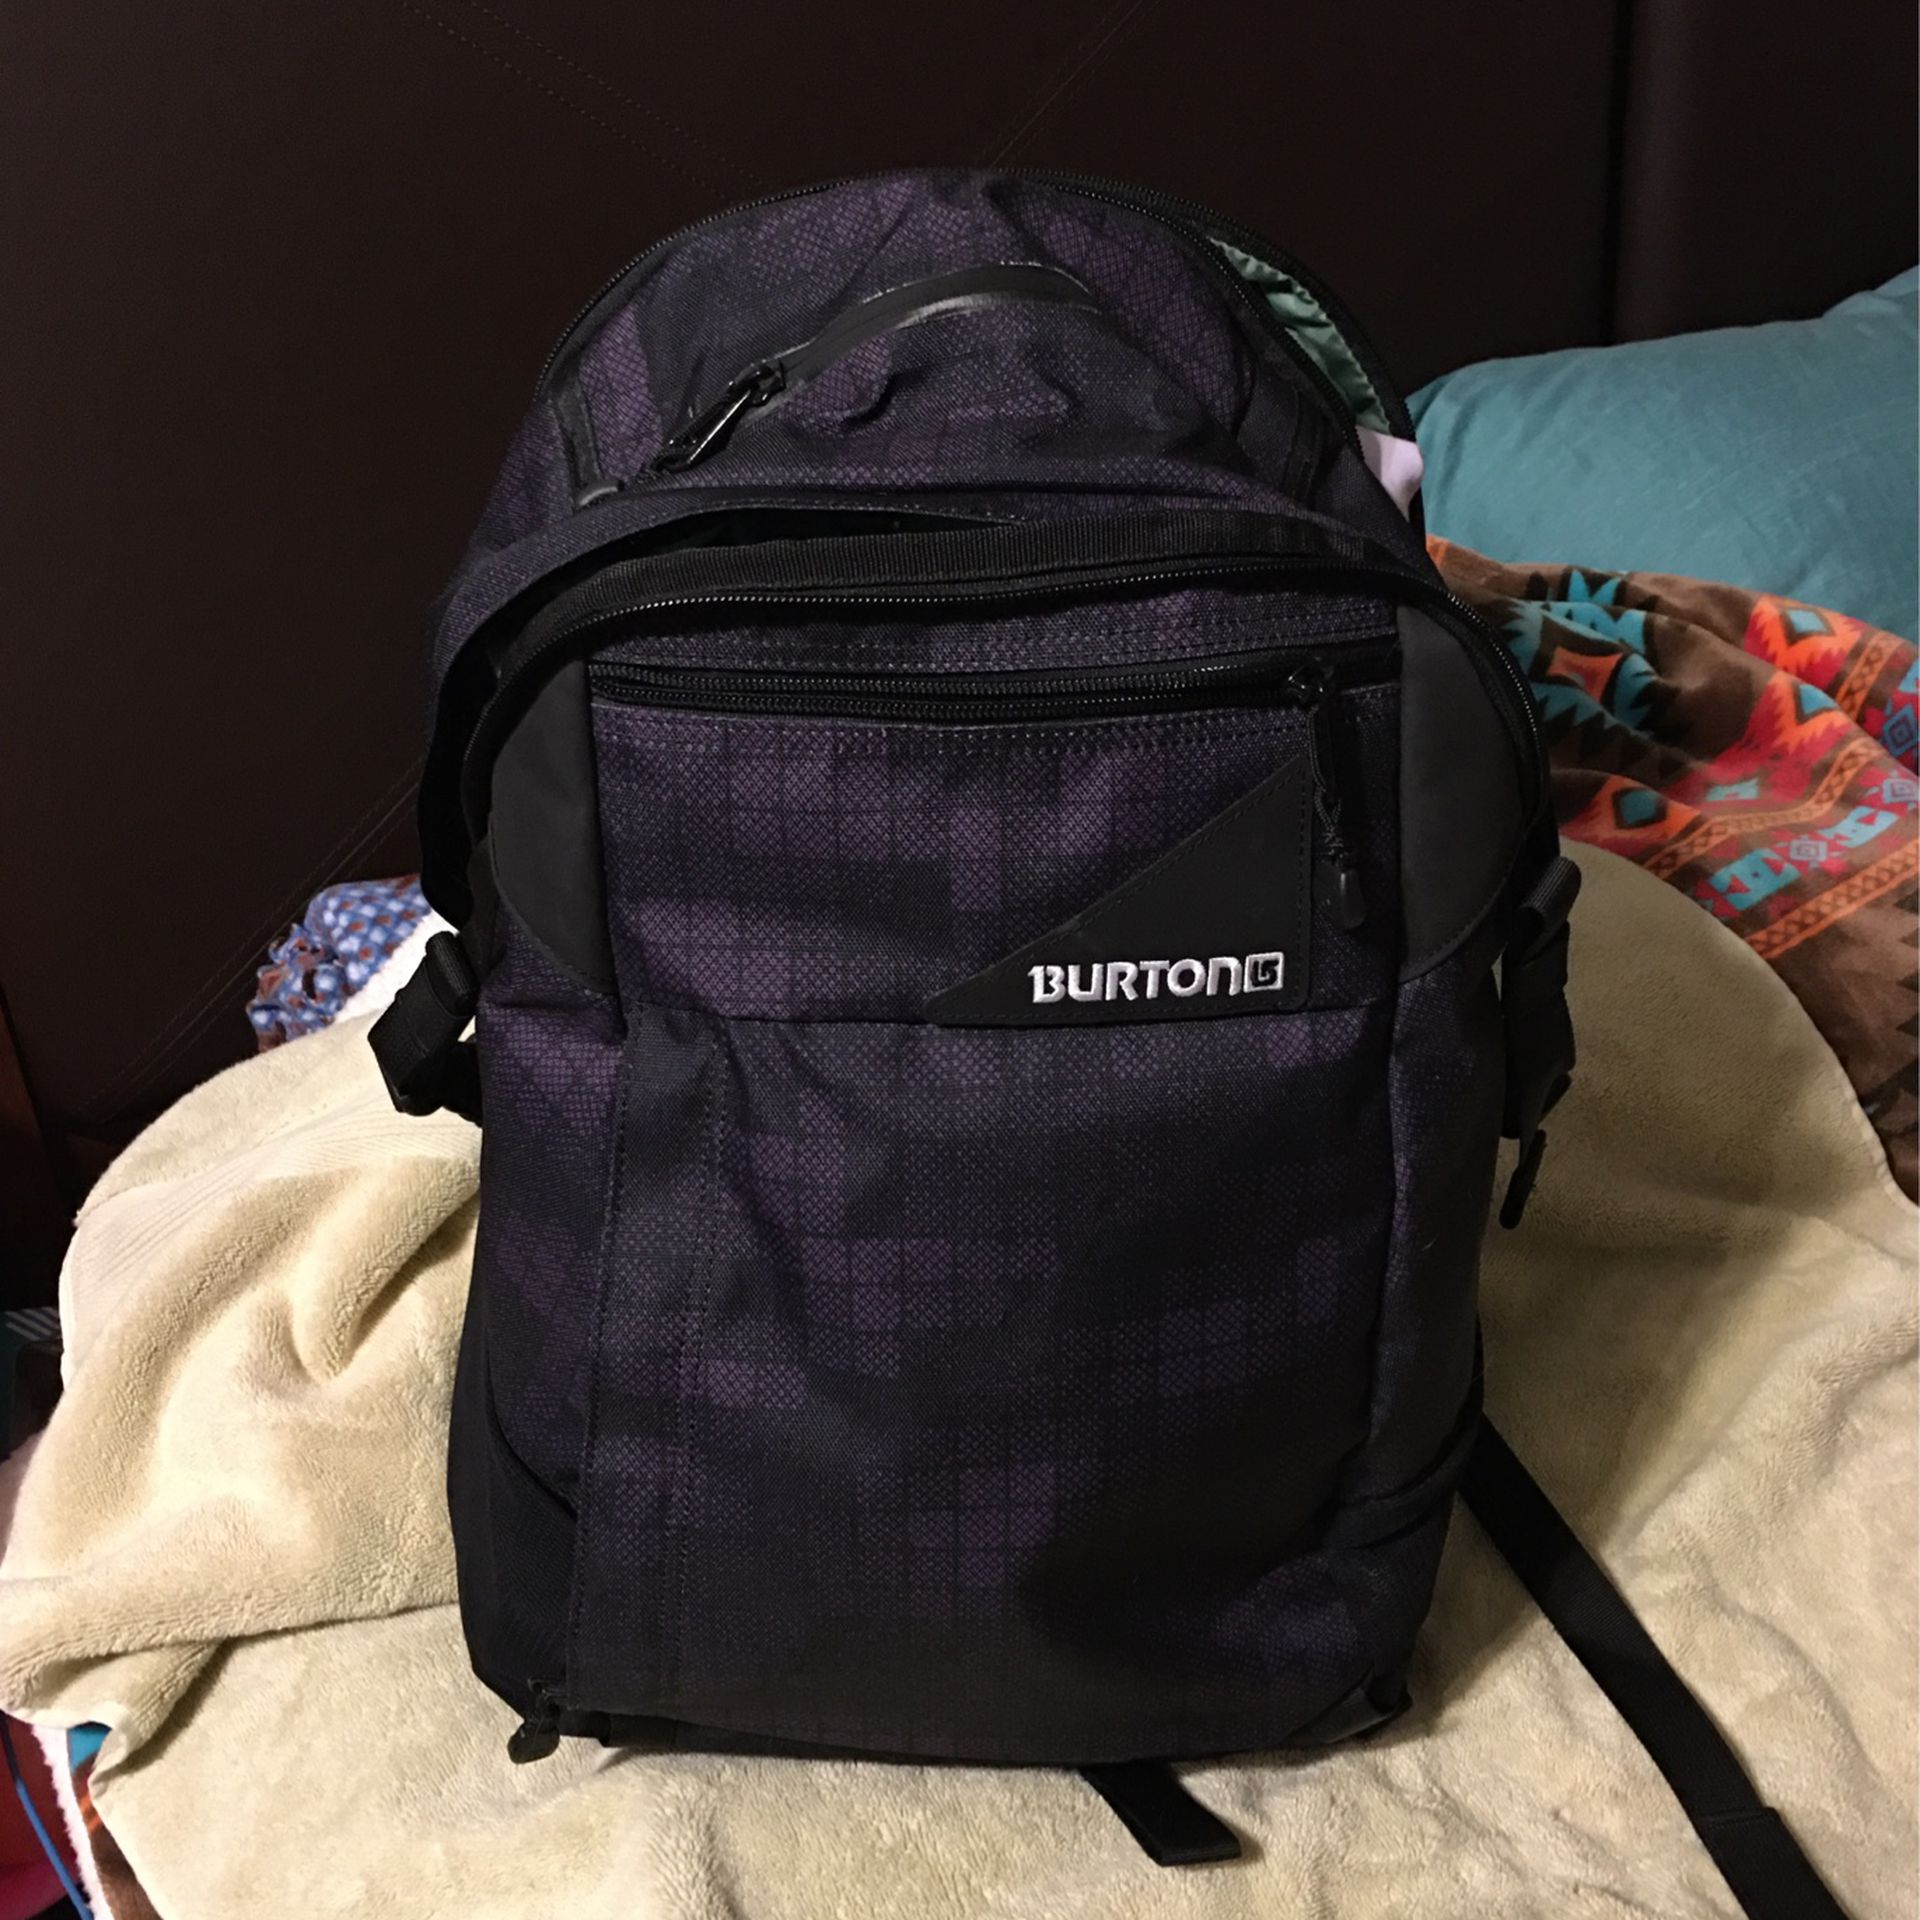 Backpack ‘Burton’ Snowboard Brand  $45